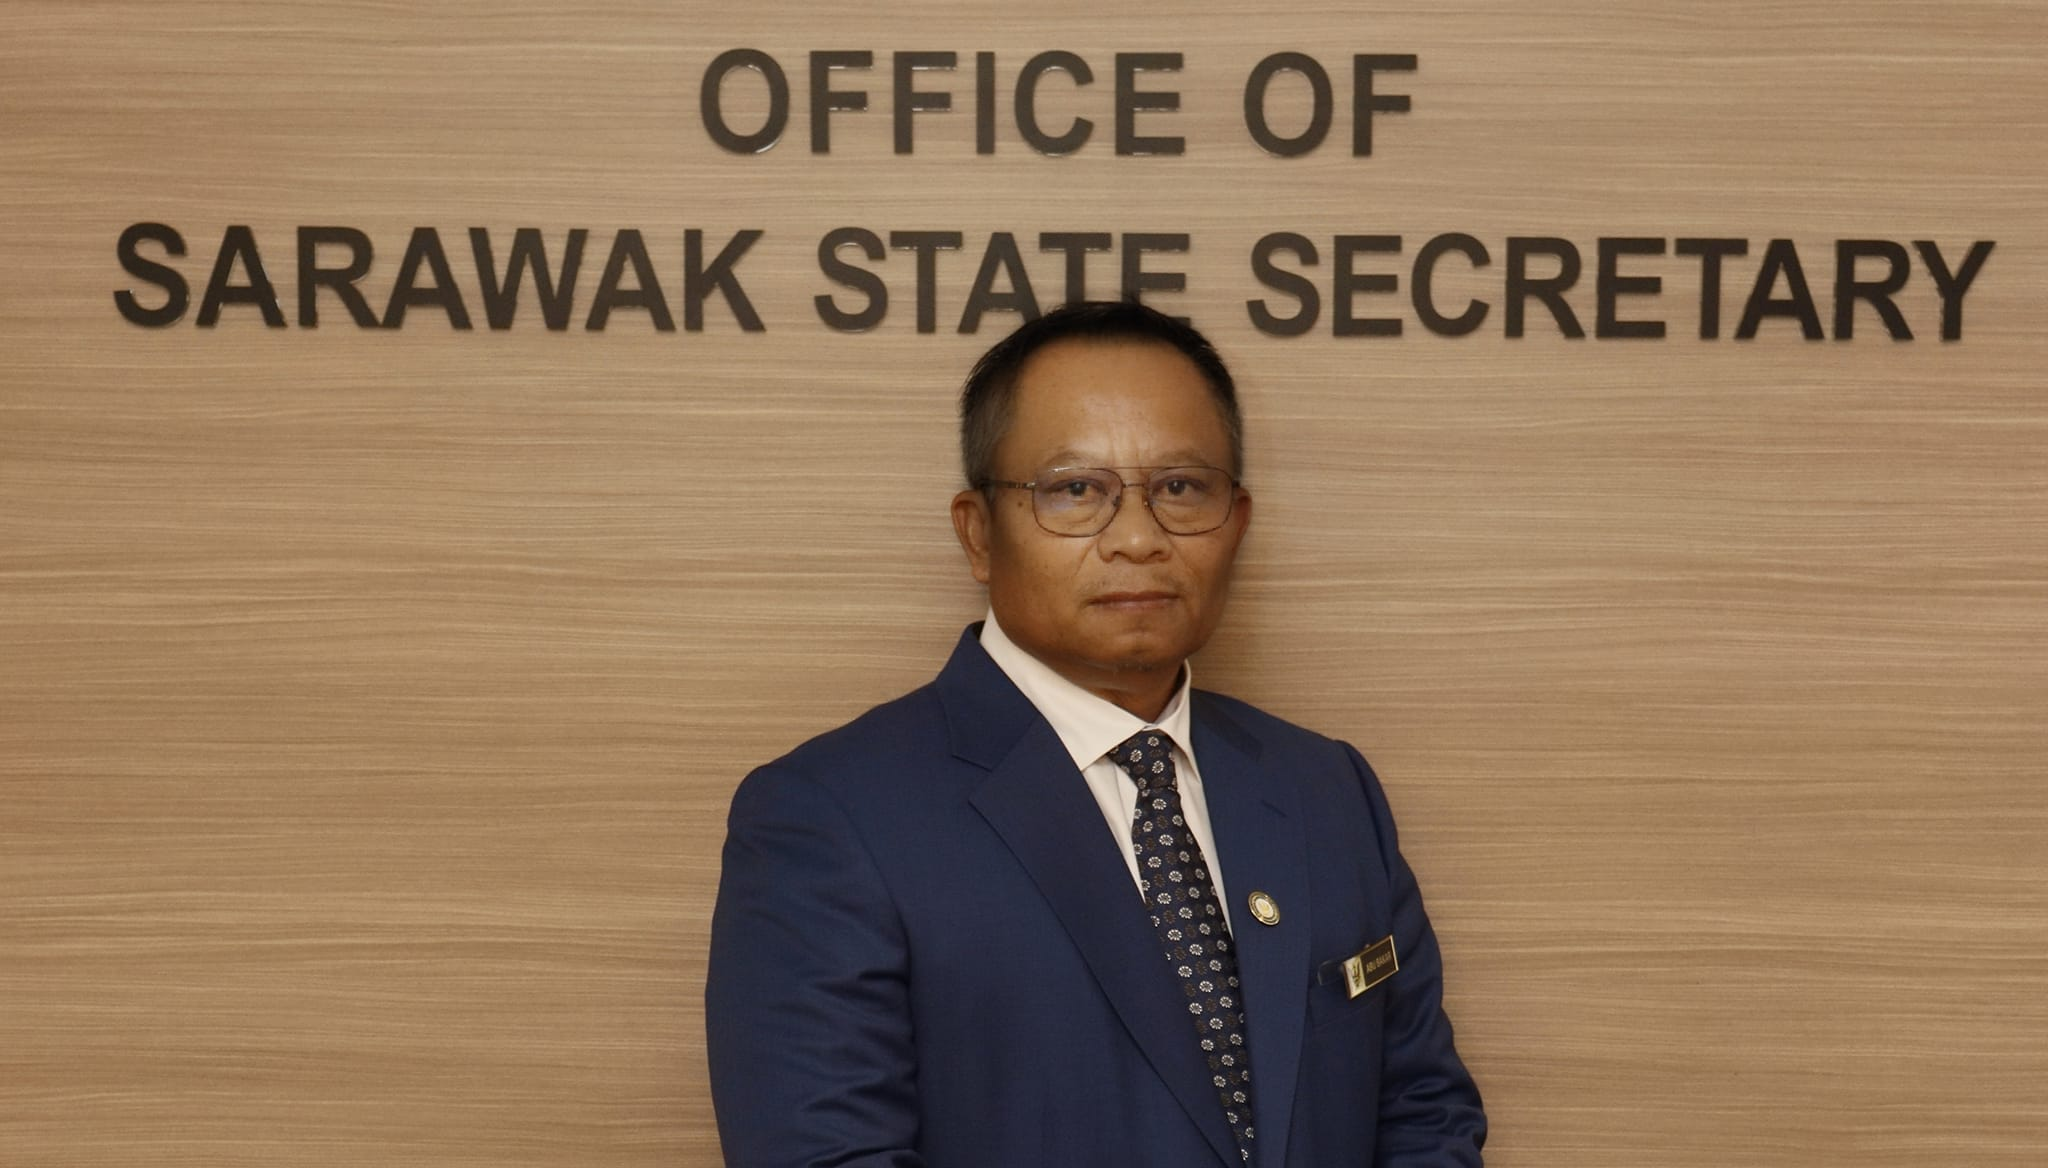 Sarawak state secretary datuk amar mohd abu bakar marzuki